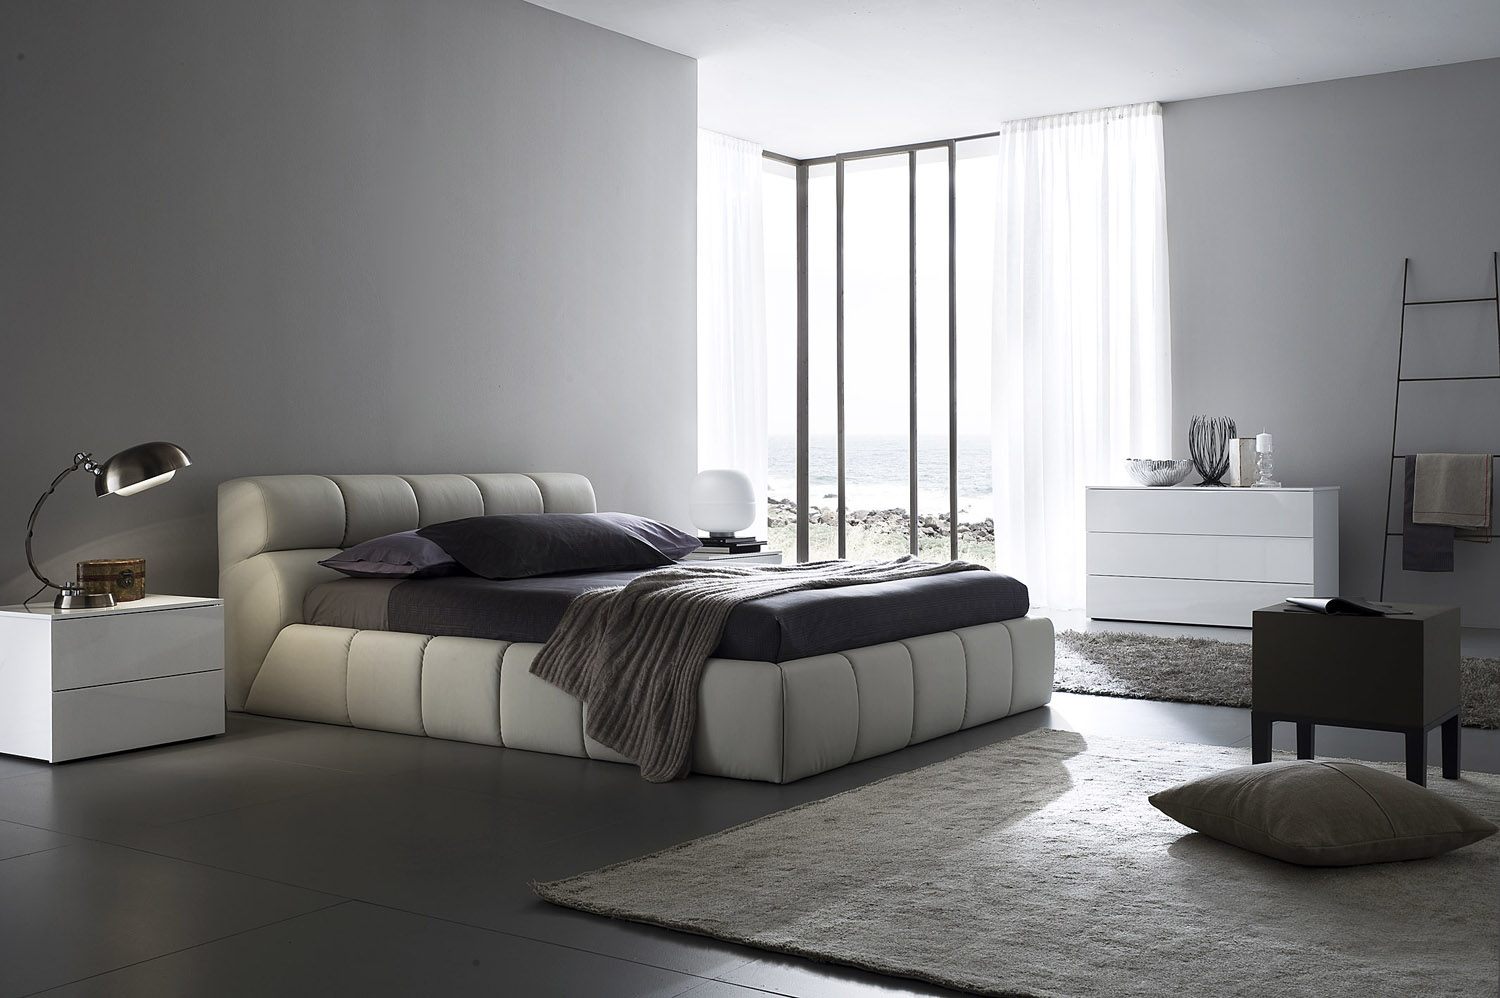 Decora o de quartos minimalista for Letto minimalista